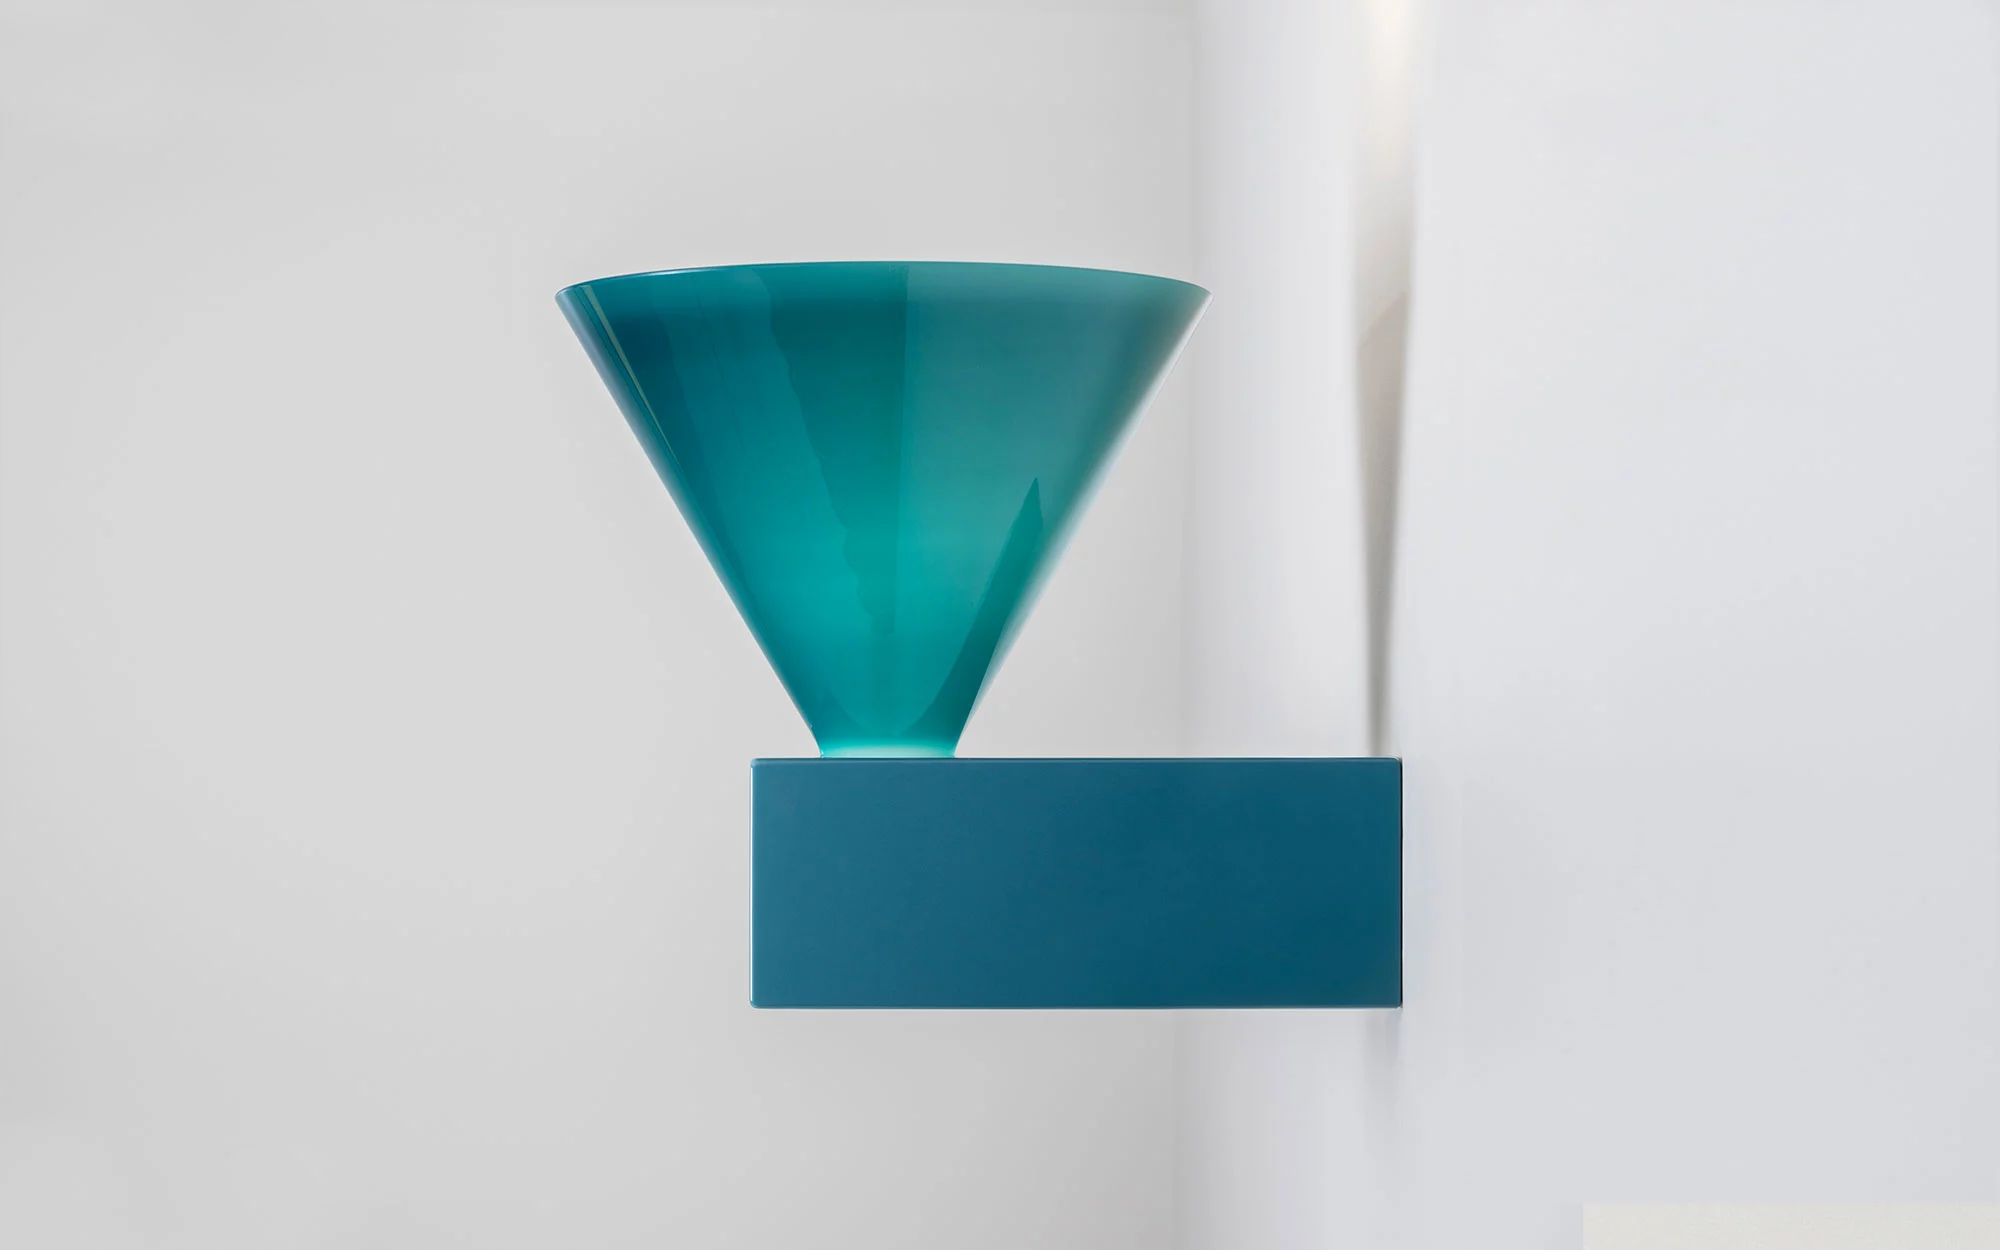 Signal W MONOCHROMATIC - Edward Barber and Jay Osgerby - Floor light - Galerie kreo